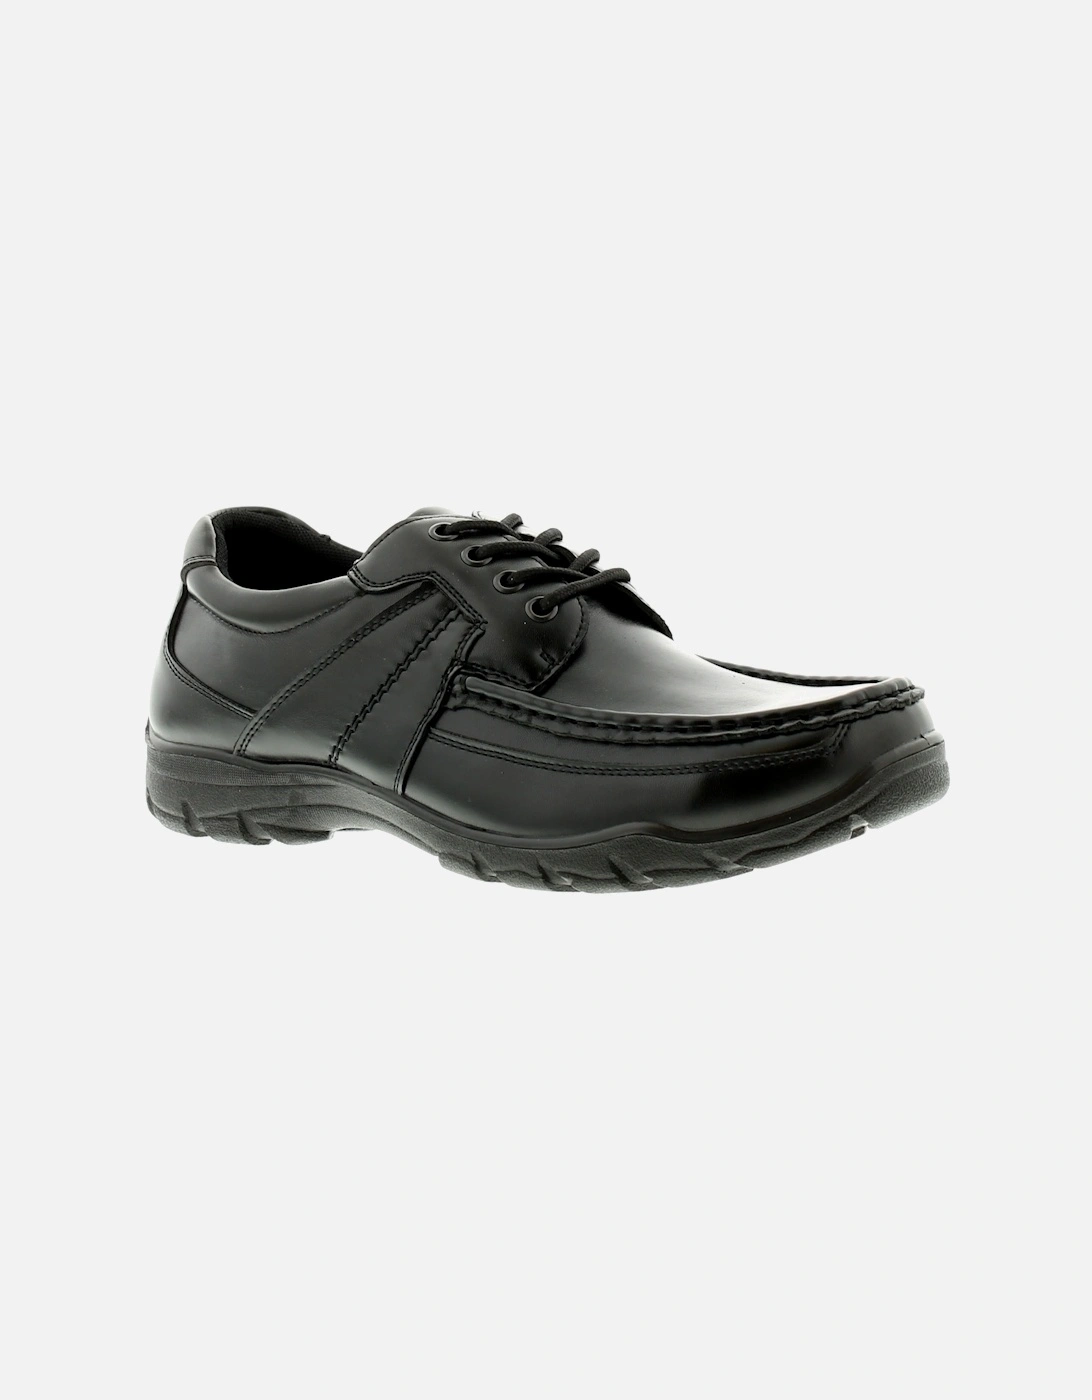 Mens Shoes Work School Rocket Lace Up black UK Size, 6 of 5